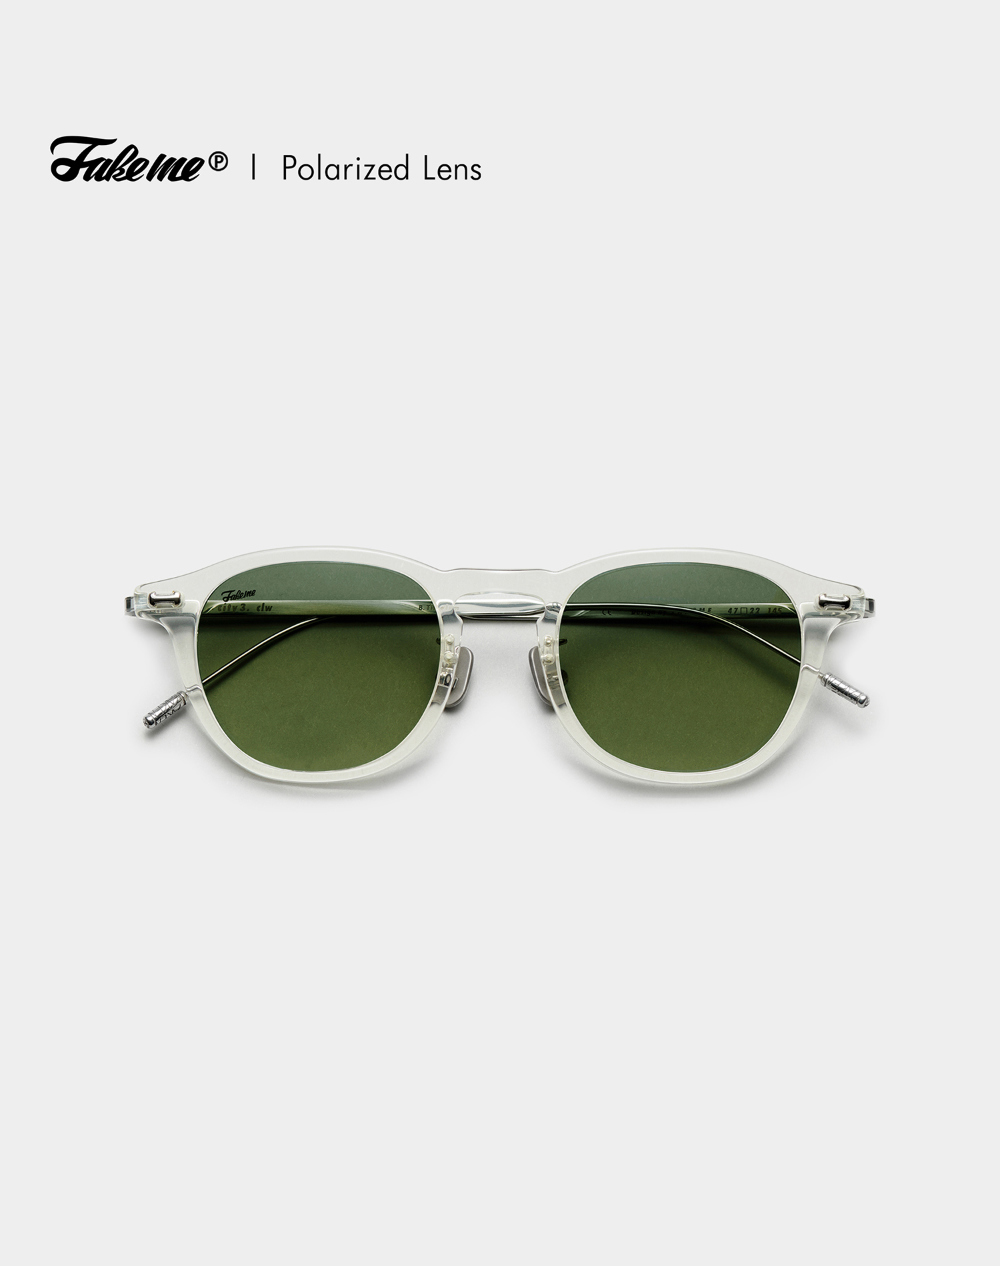 眼镜 olive 彩色图像-S1L5